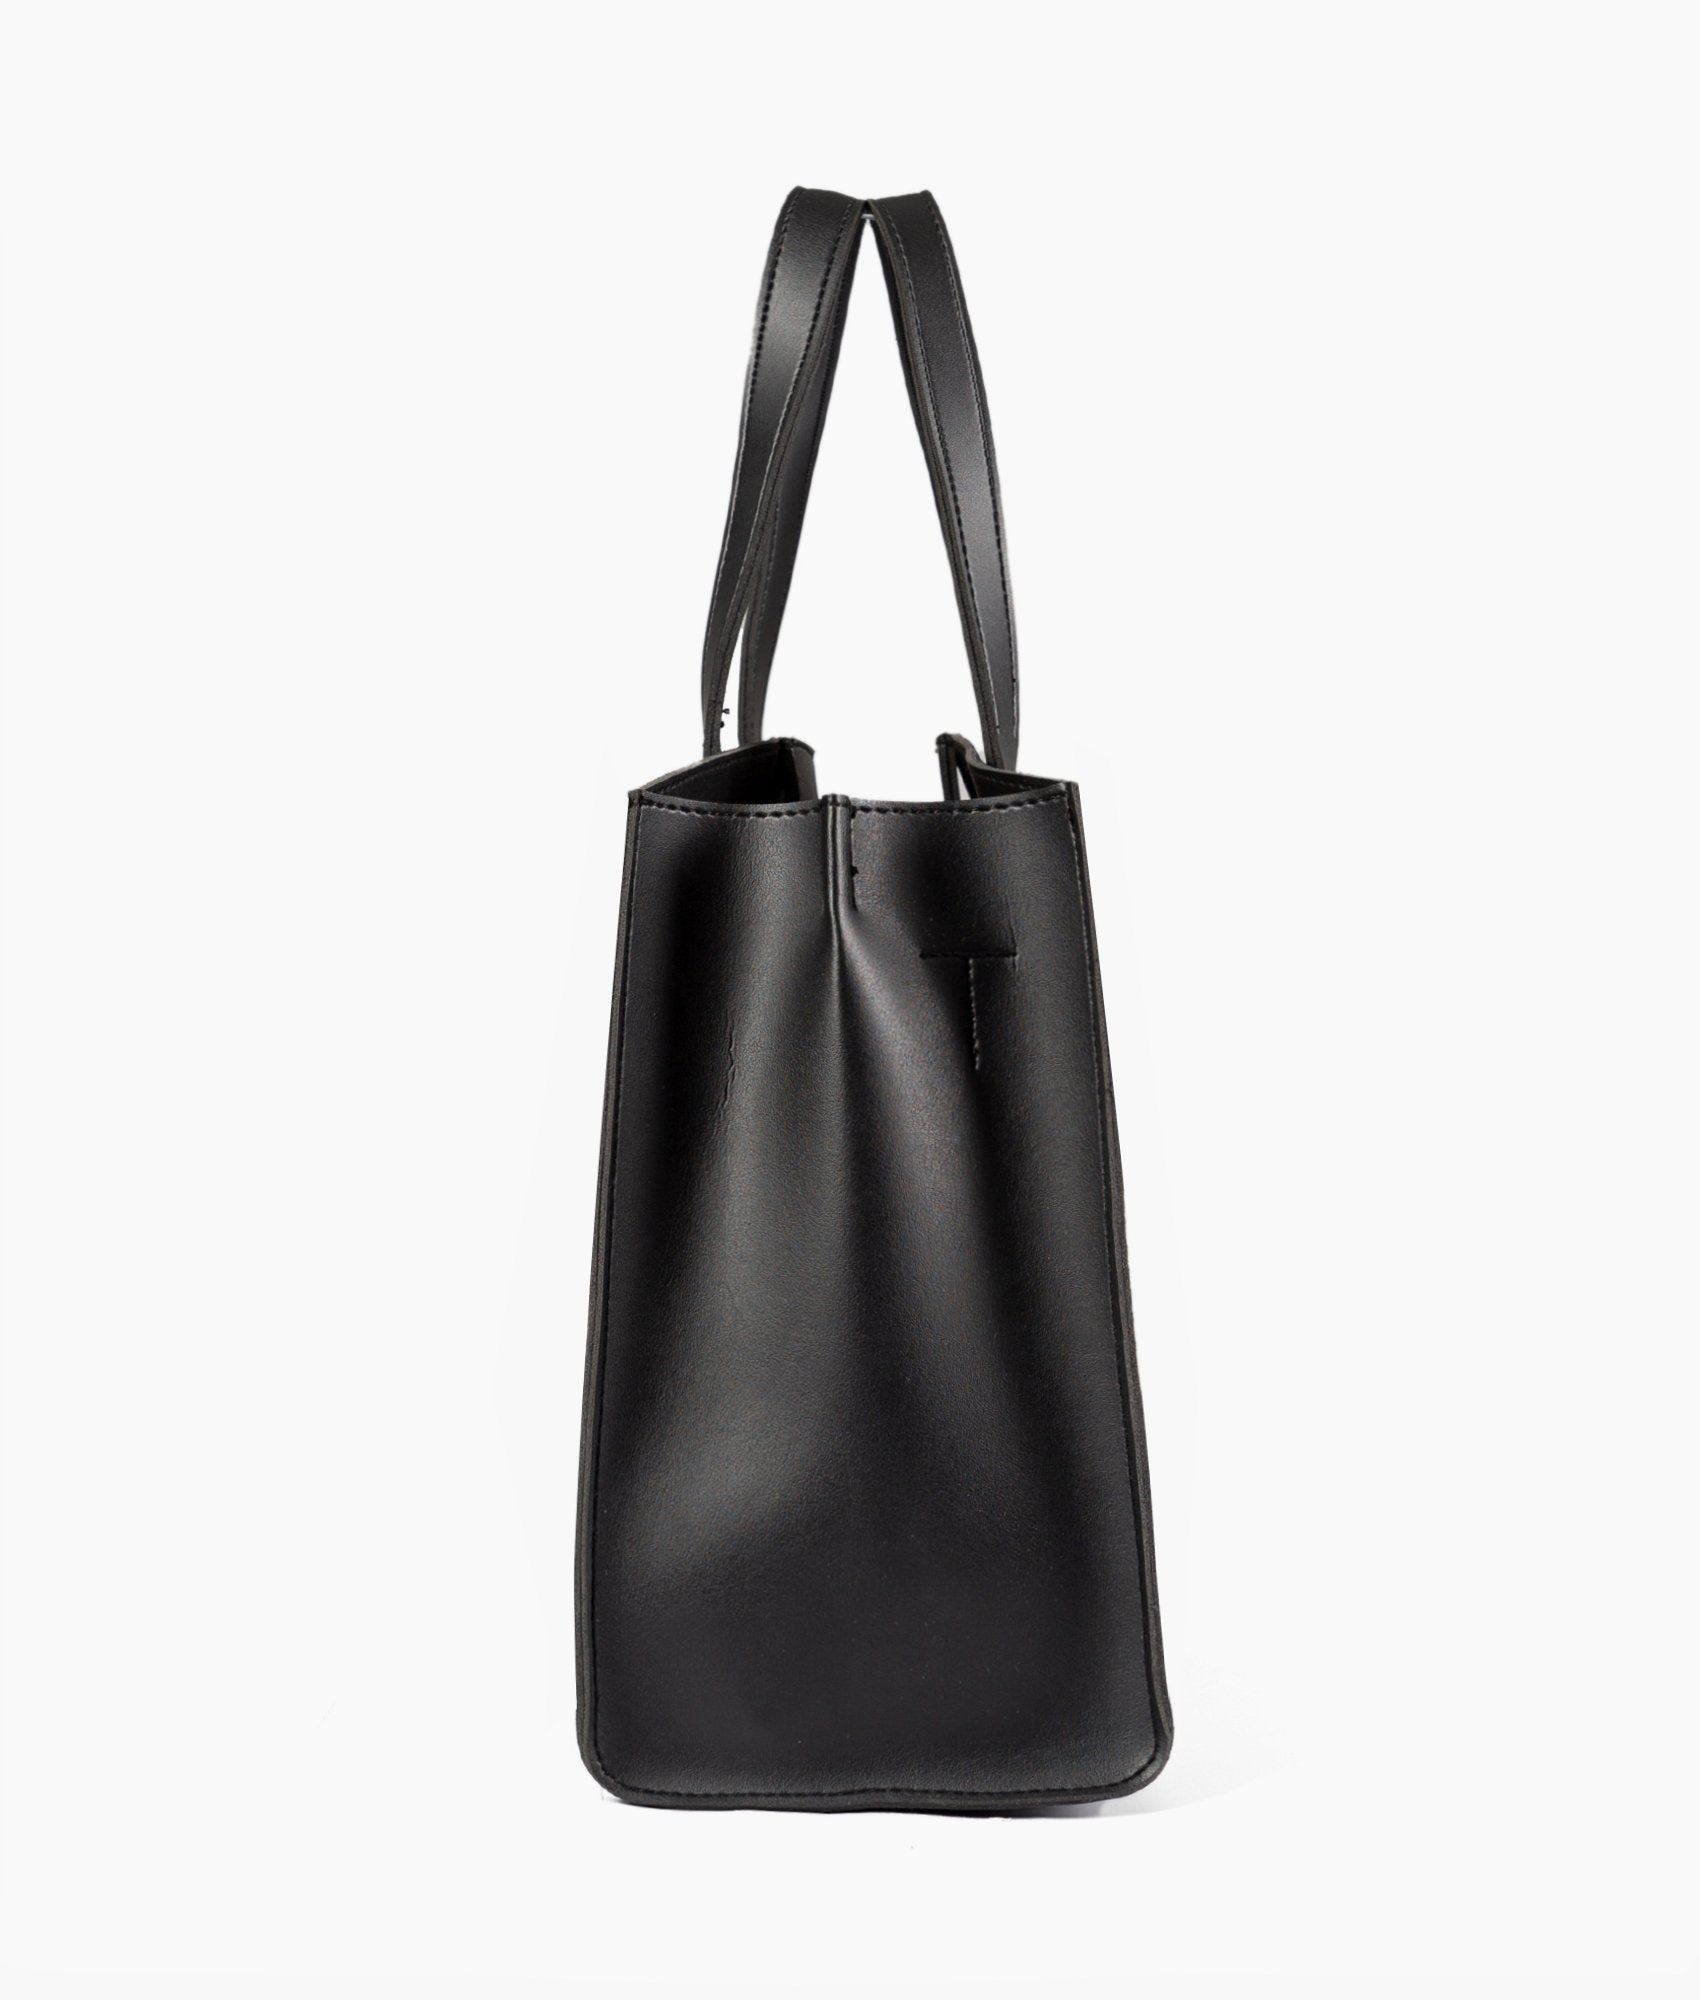 Black suede multi compartment satchel bag